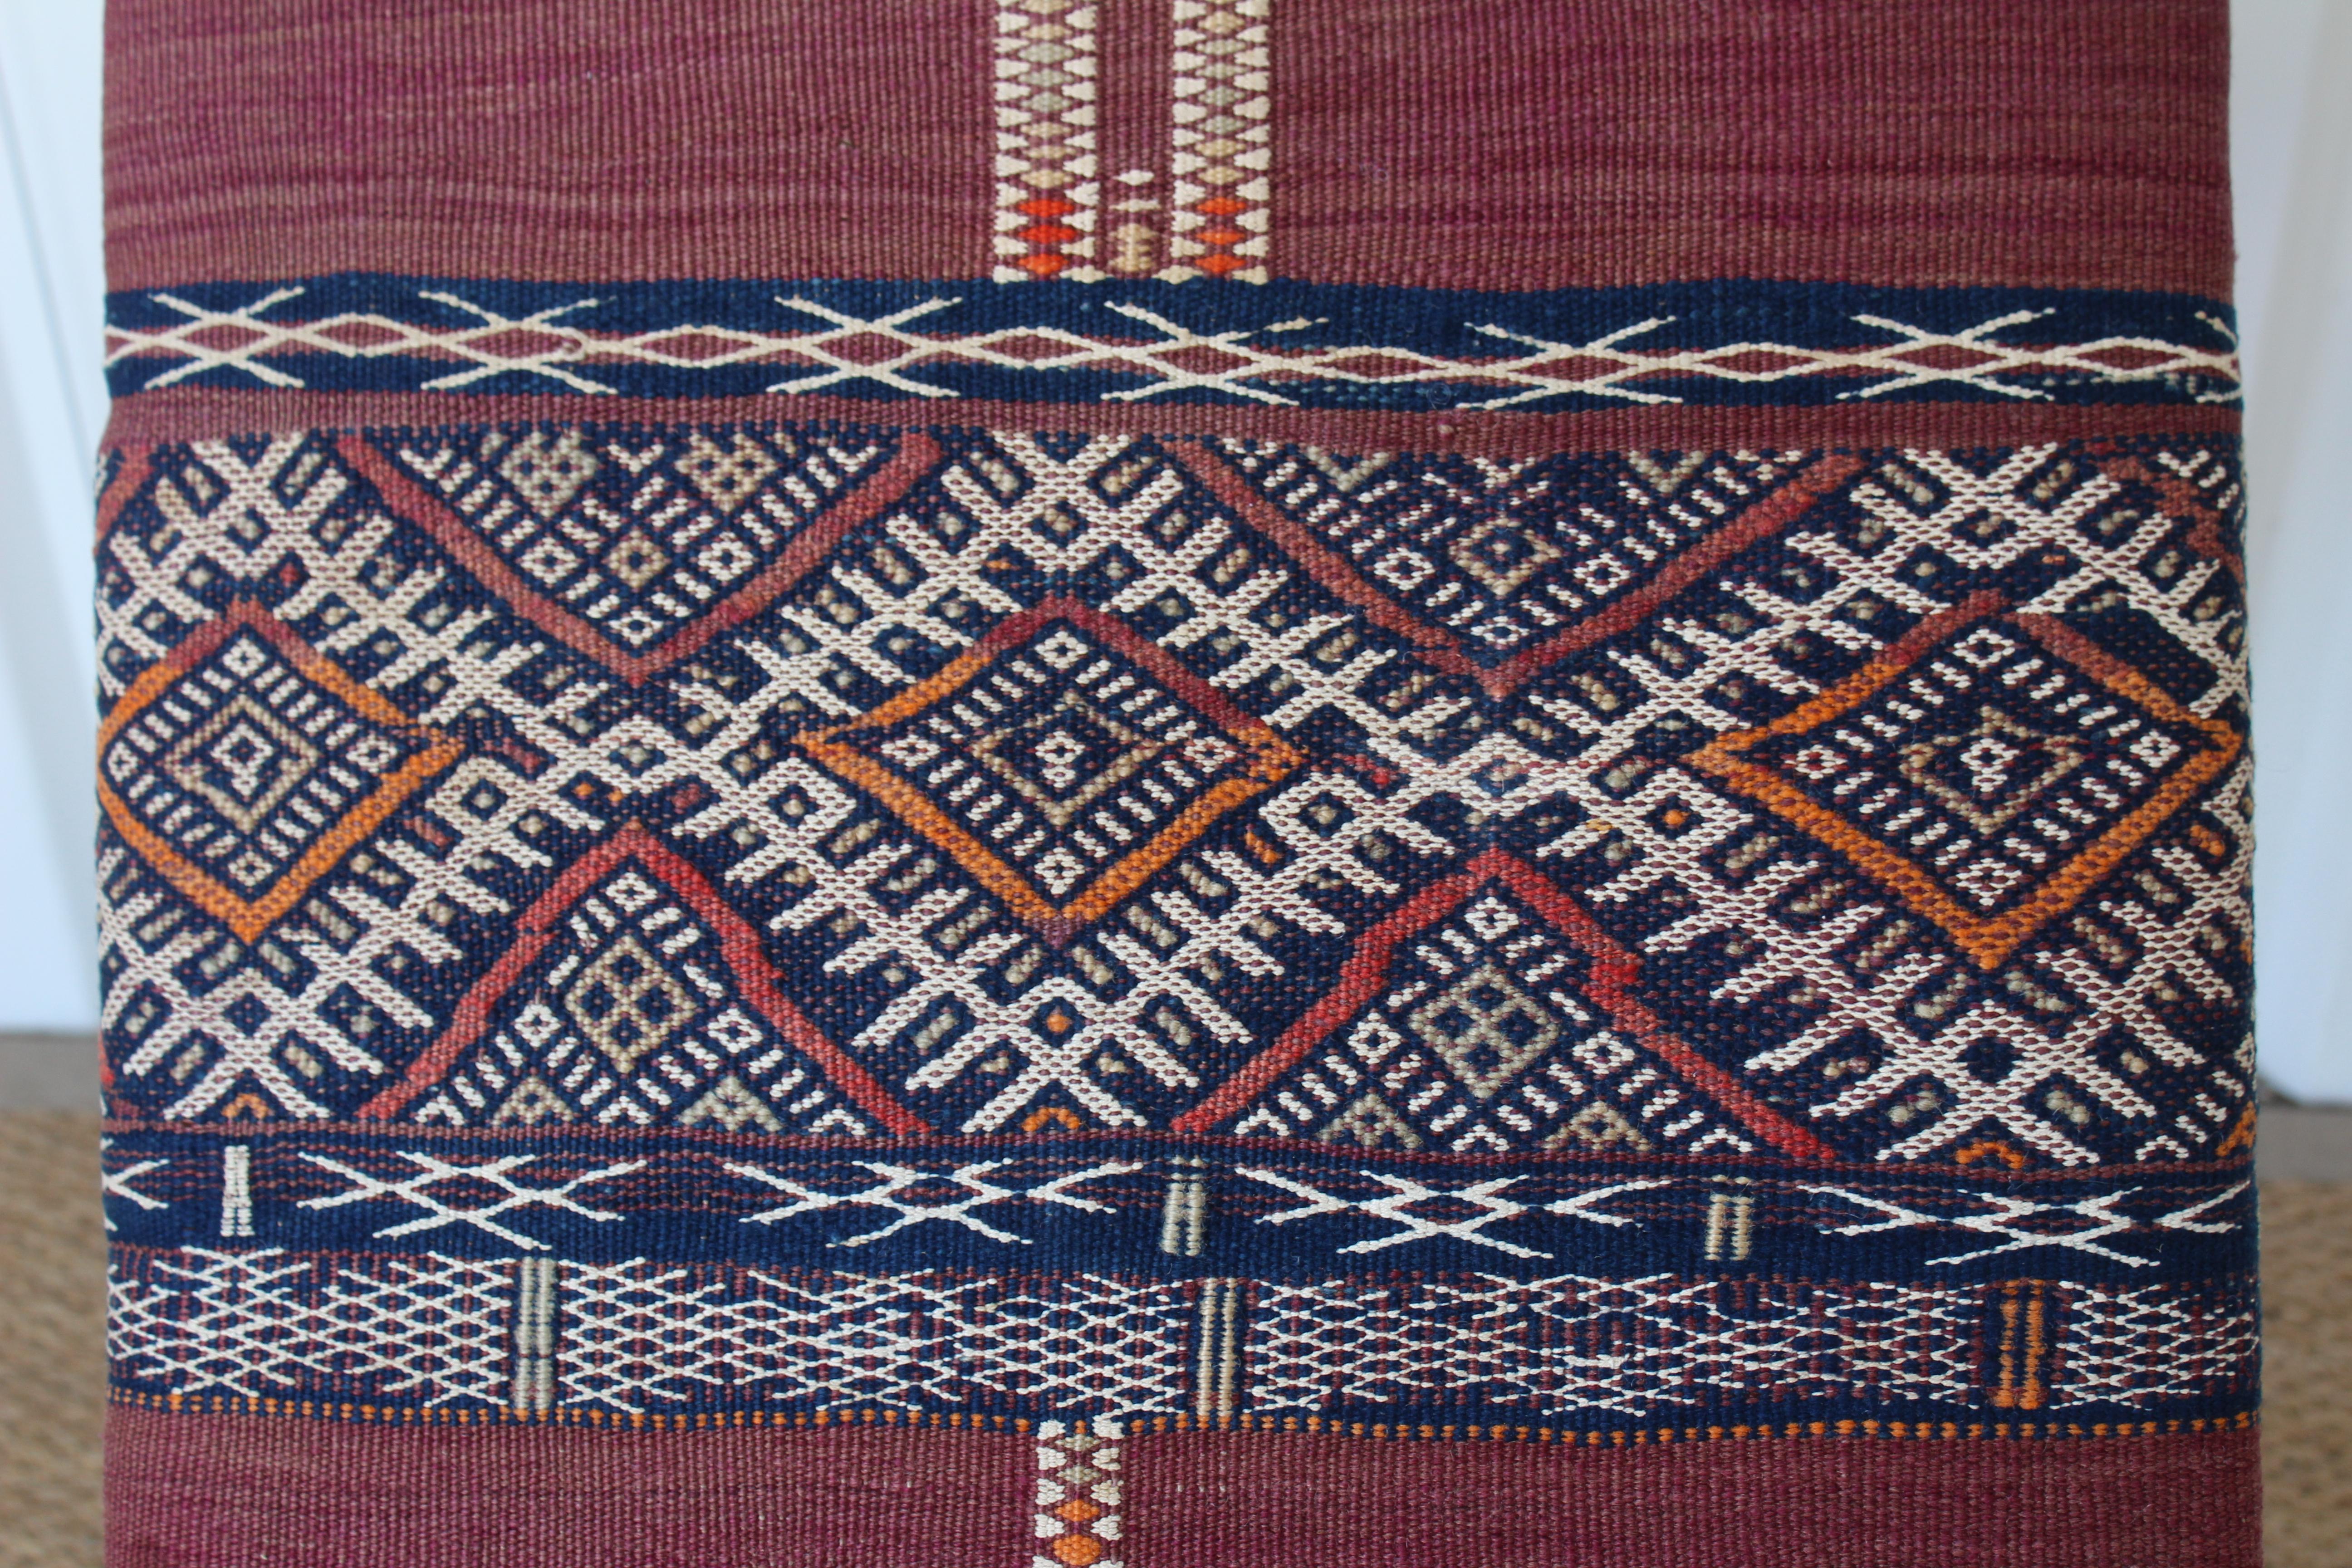 Wool Vintage English Bench Upholstered in a Turkish Kilim Rug